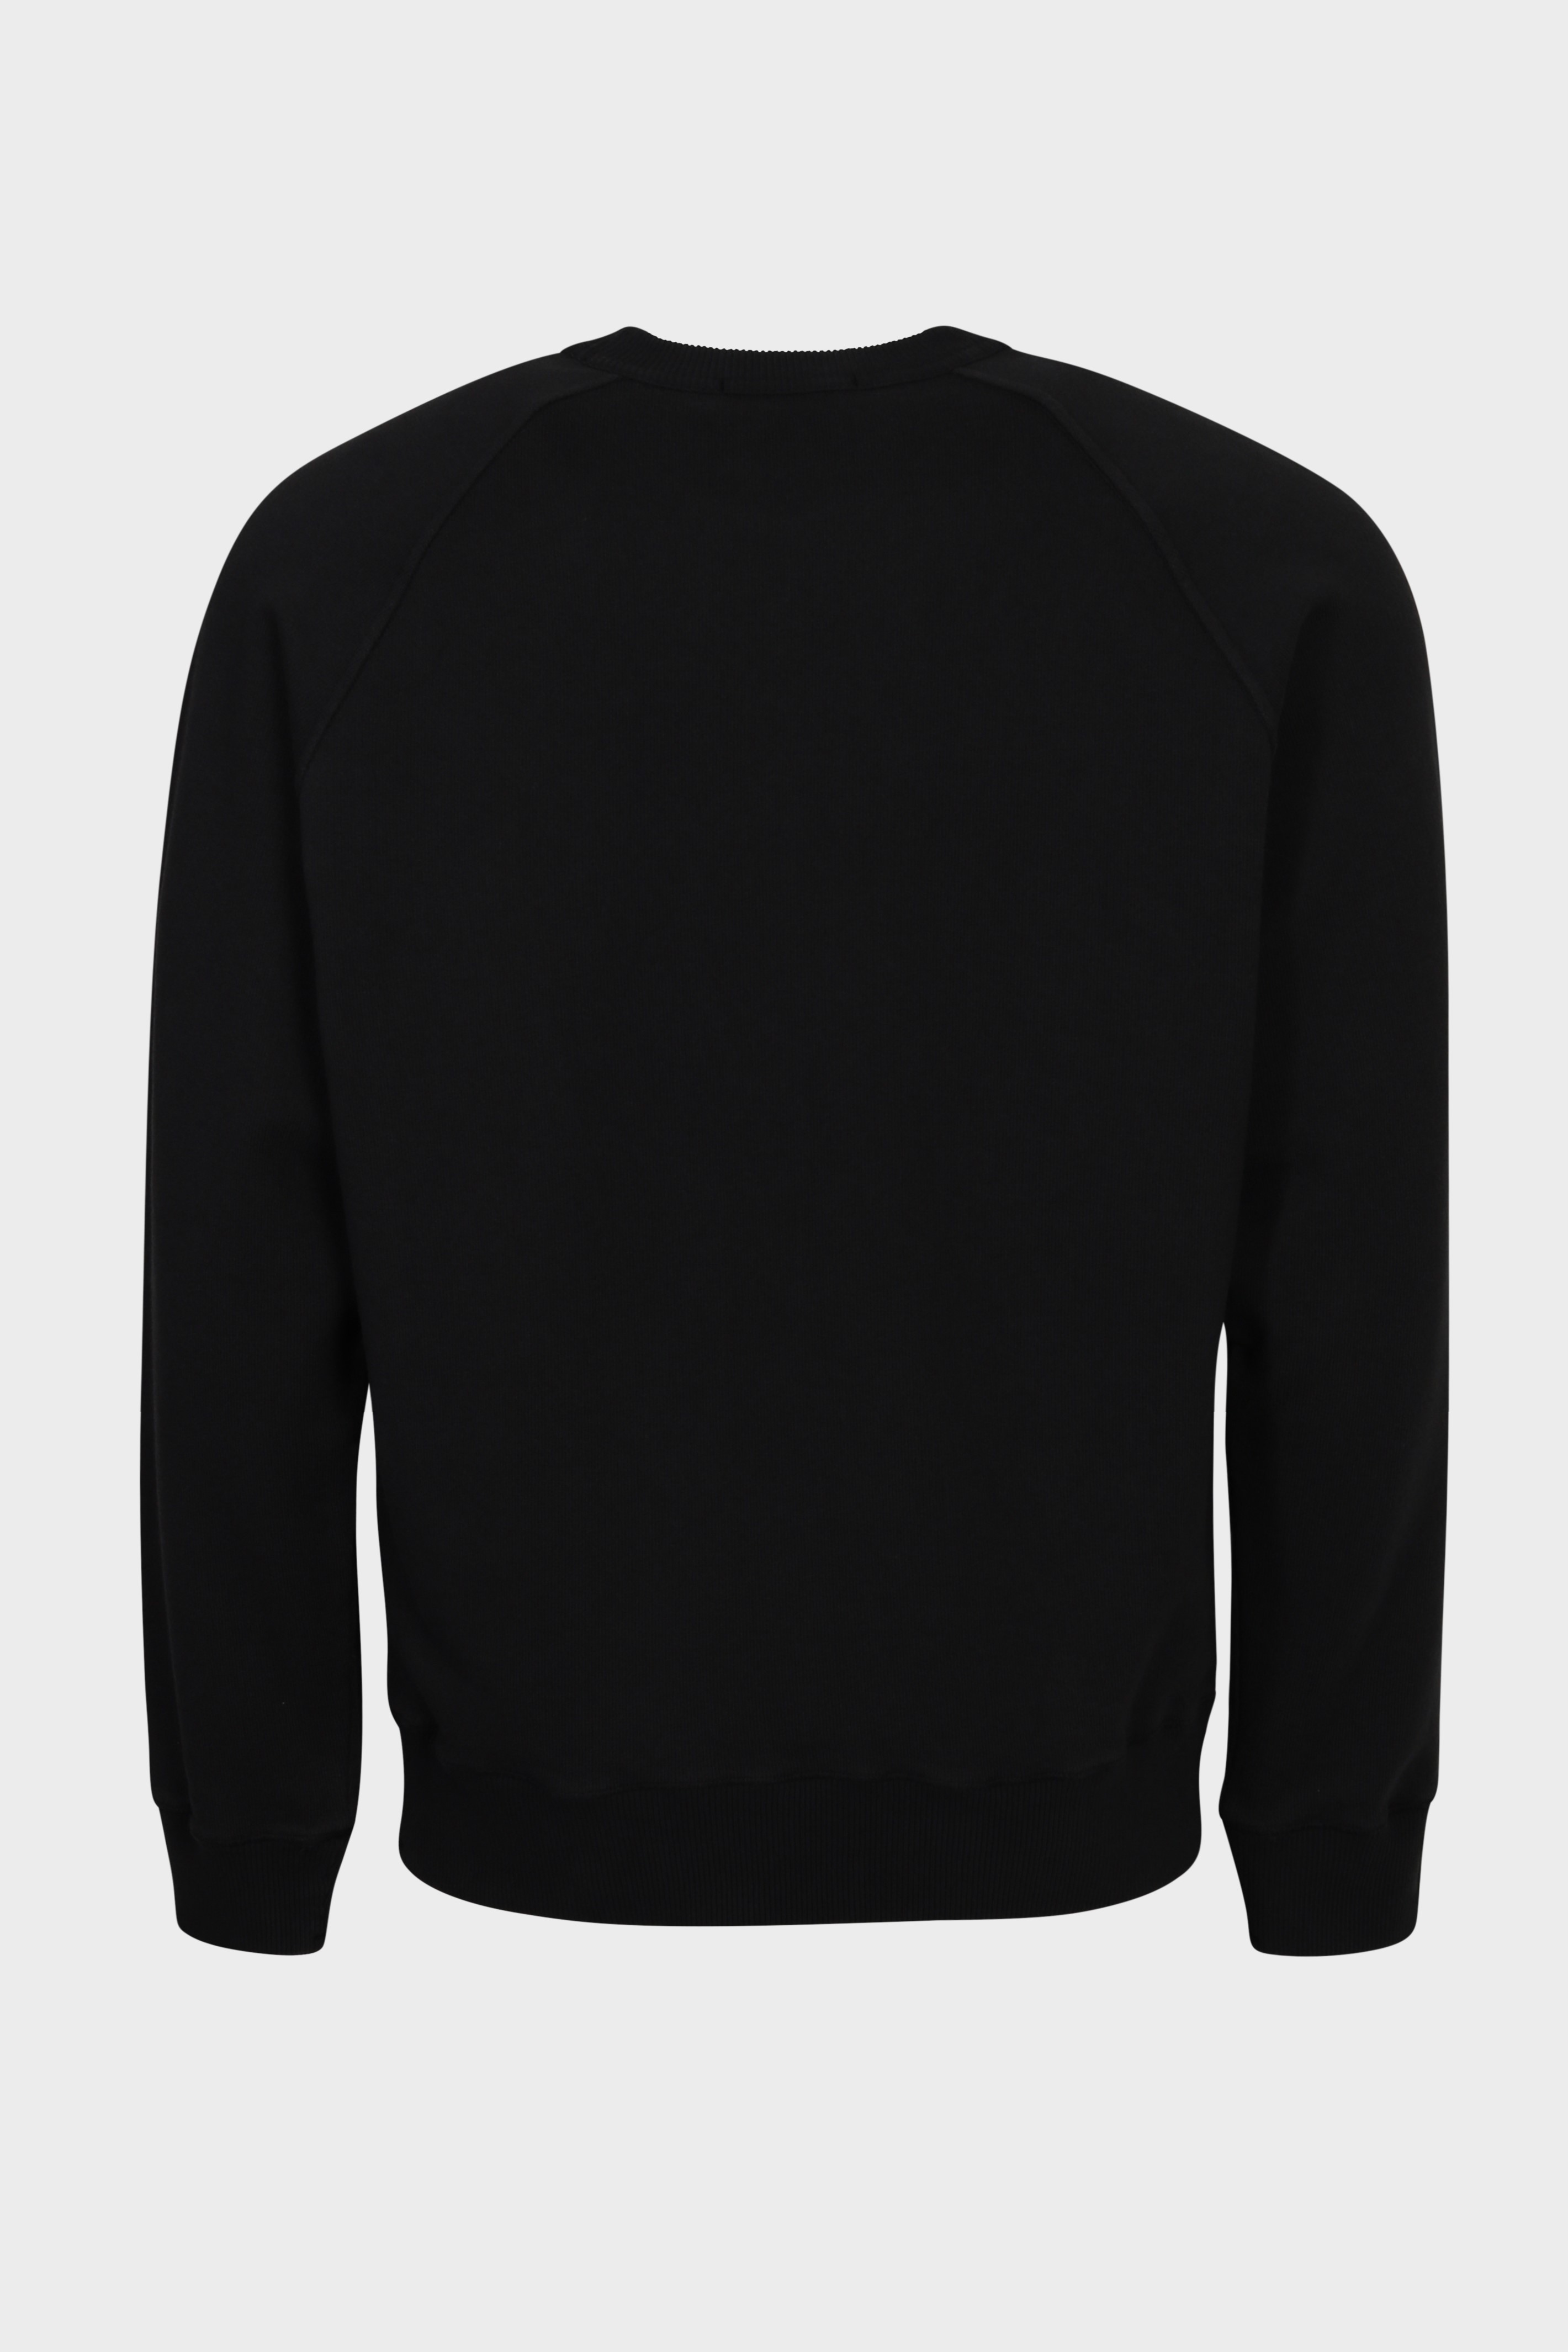 STONE ISLAND Stamp Sweatshirt in Black 2XL